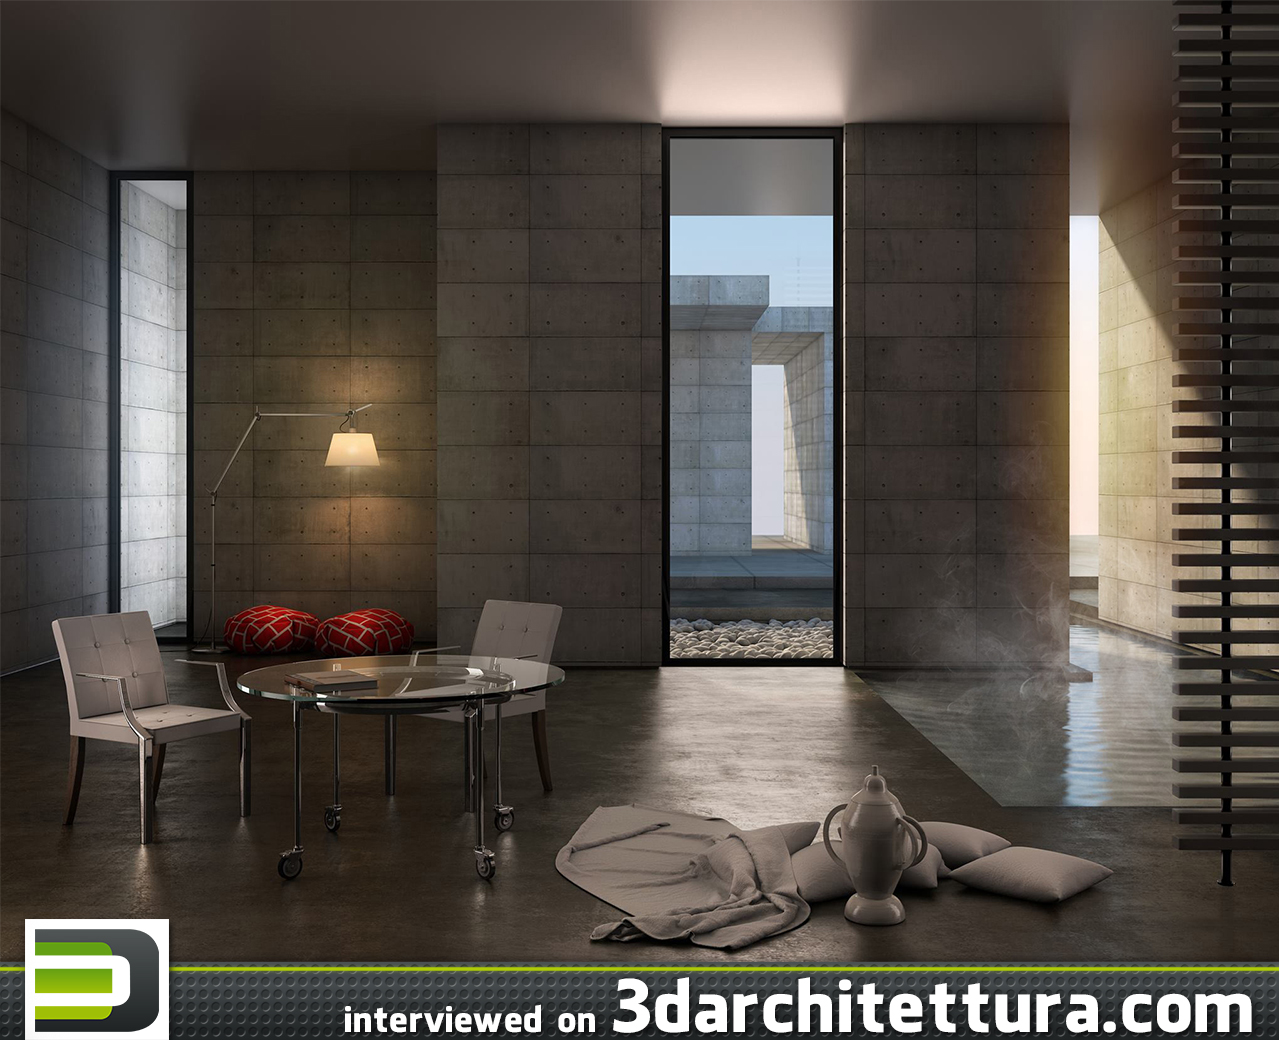 Alfonso Cucinelli interviewd for 3d Architettura: render, 3d, design, cg, architecture